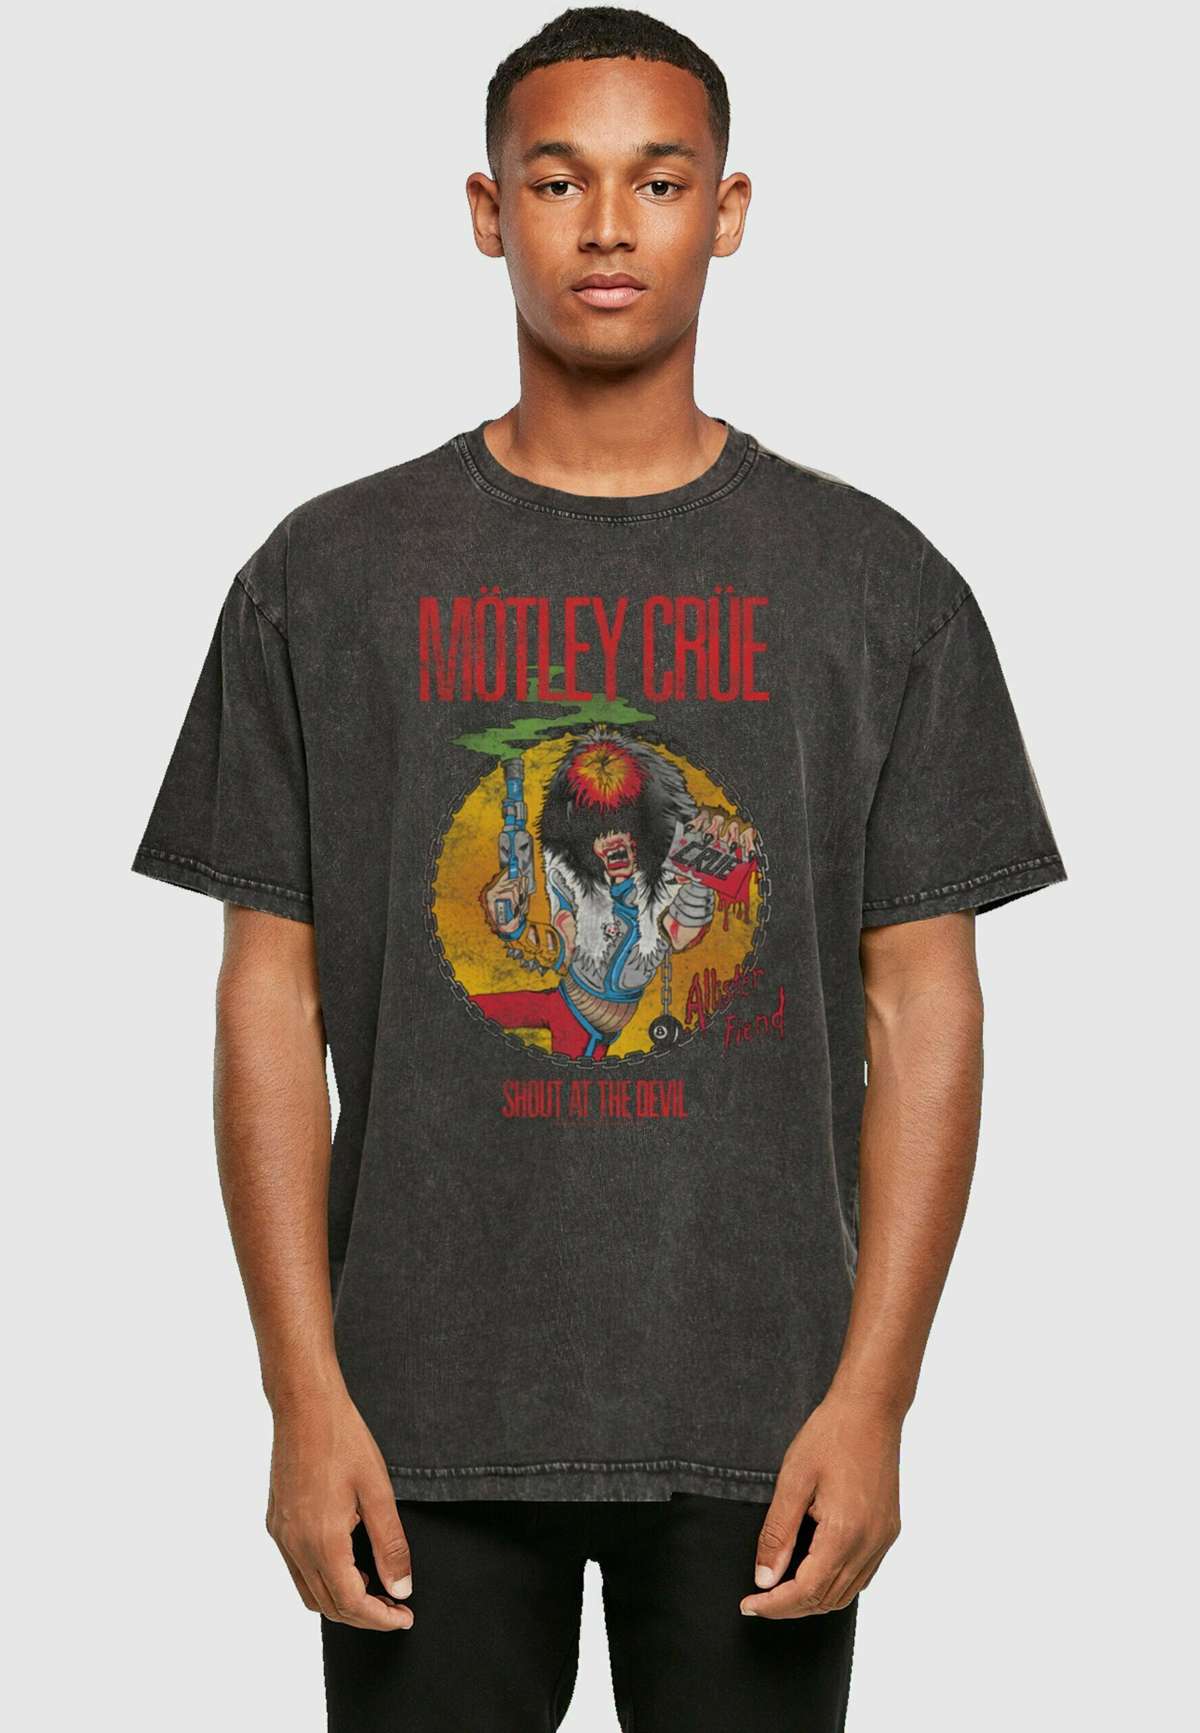 MOTLEY CRUE - ALLISTER FIEND SATD ACID WASHED HEAVY OVERSIZE TEE - T-Shirt print MOTLEY CRUE